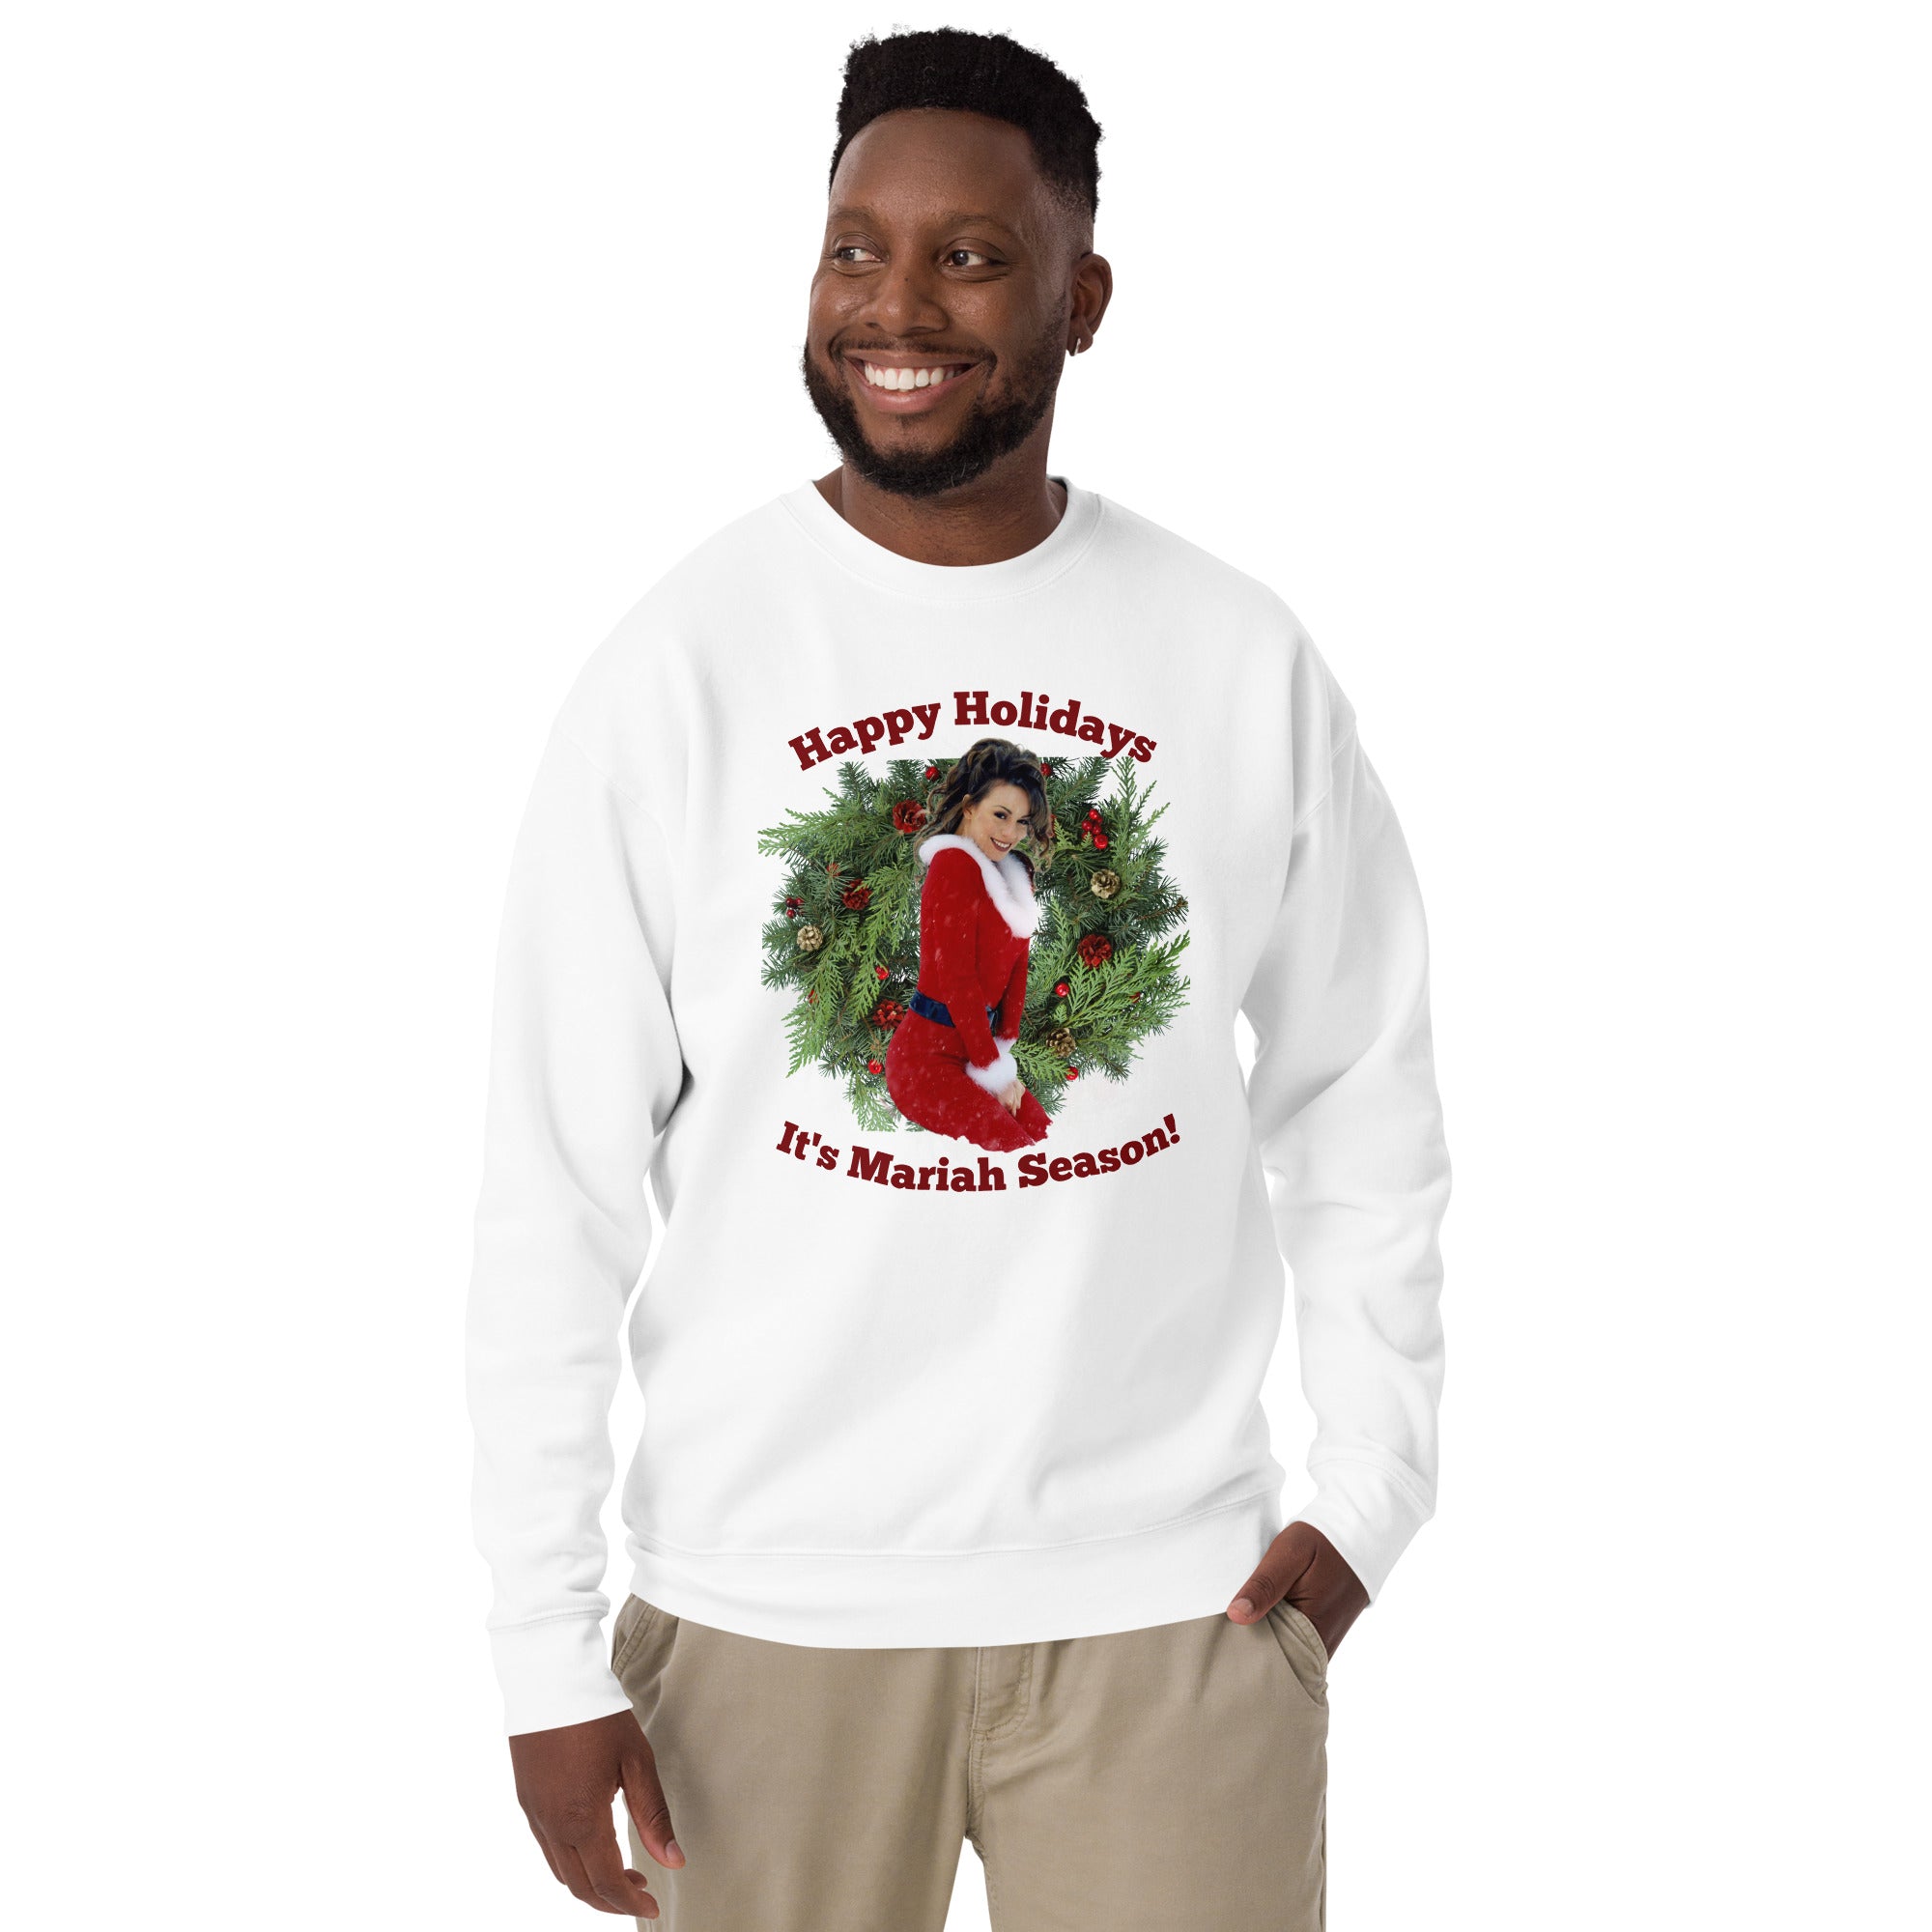 Mariah Season Christmas Sweater